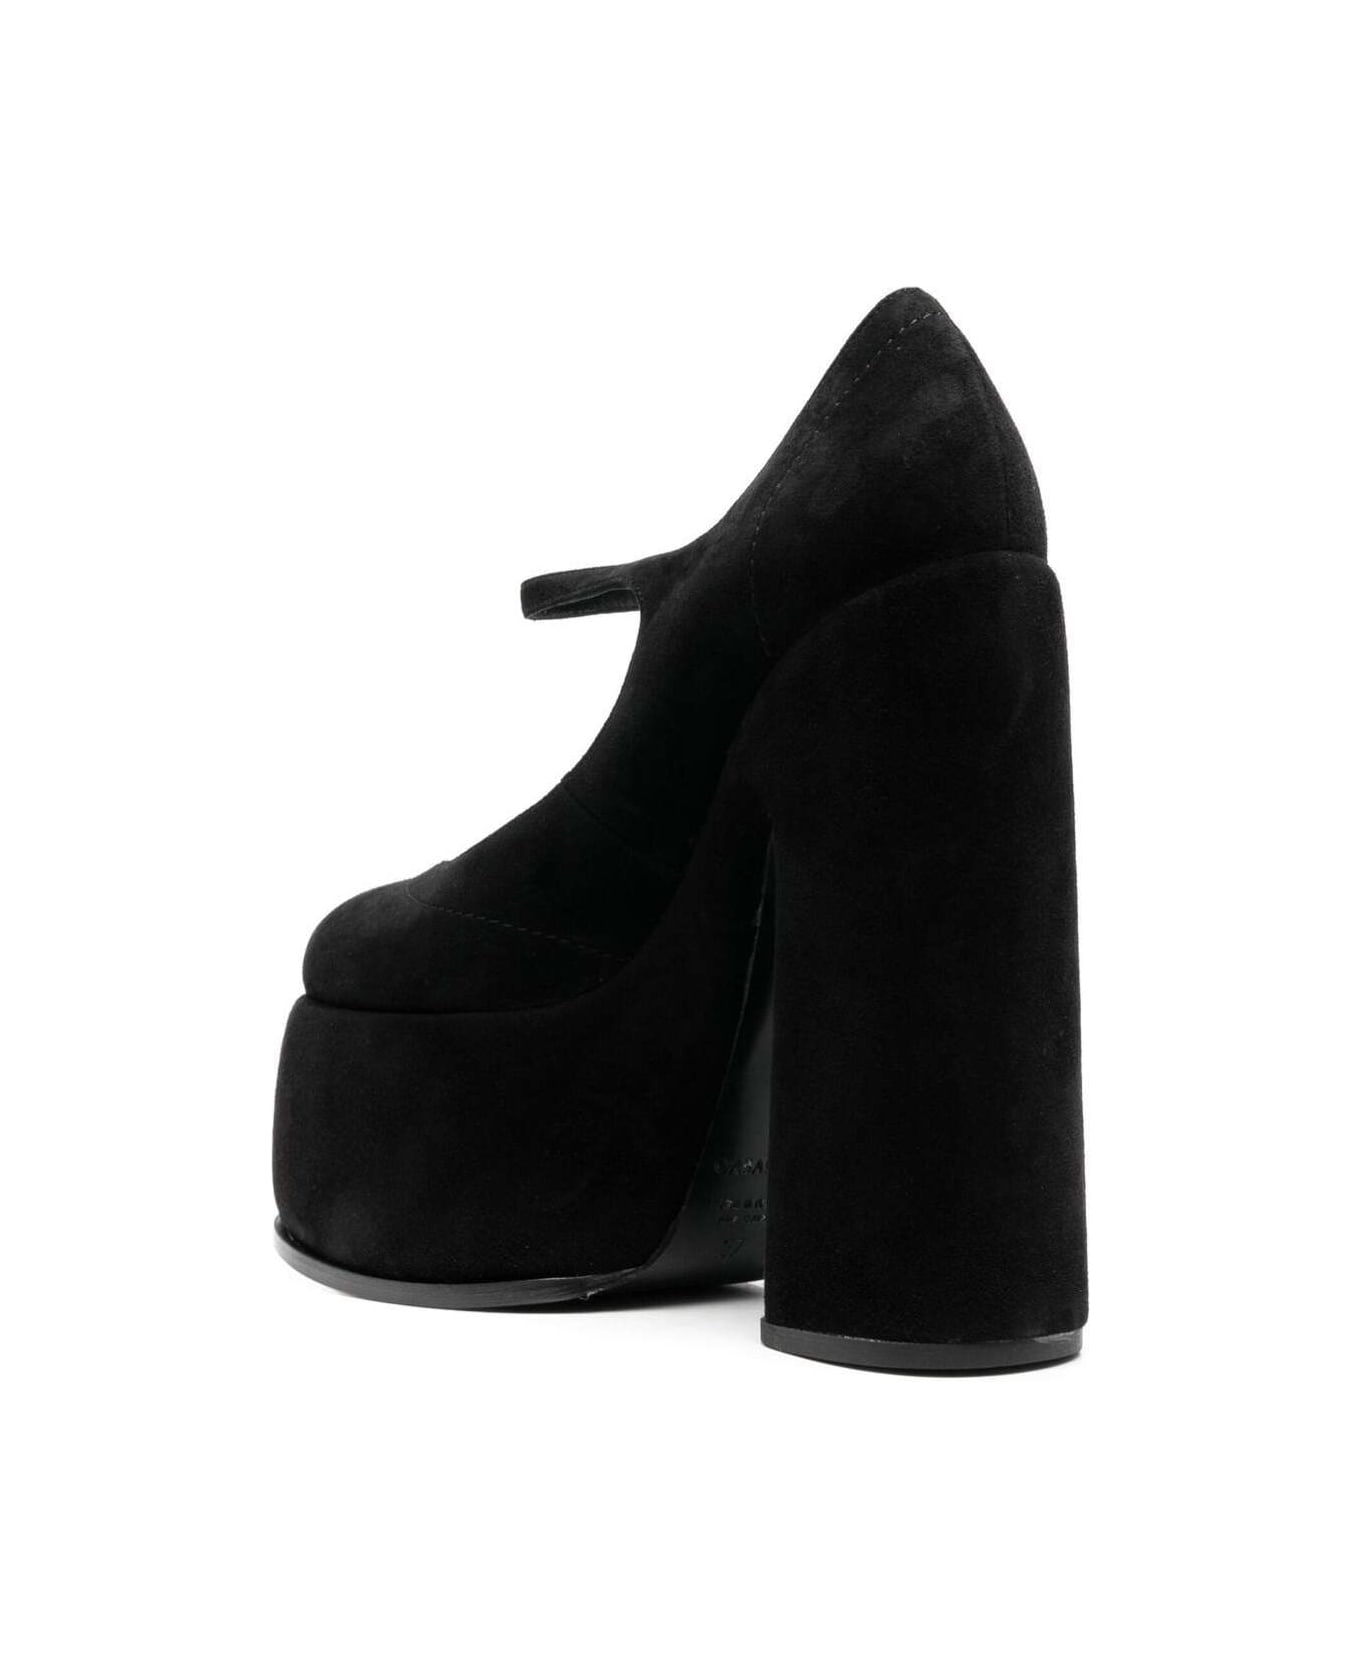 Casadei Mary Jane Rock Black Suede Heeled Sandals With Instep Strap And Platform - Black